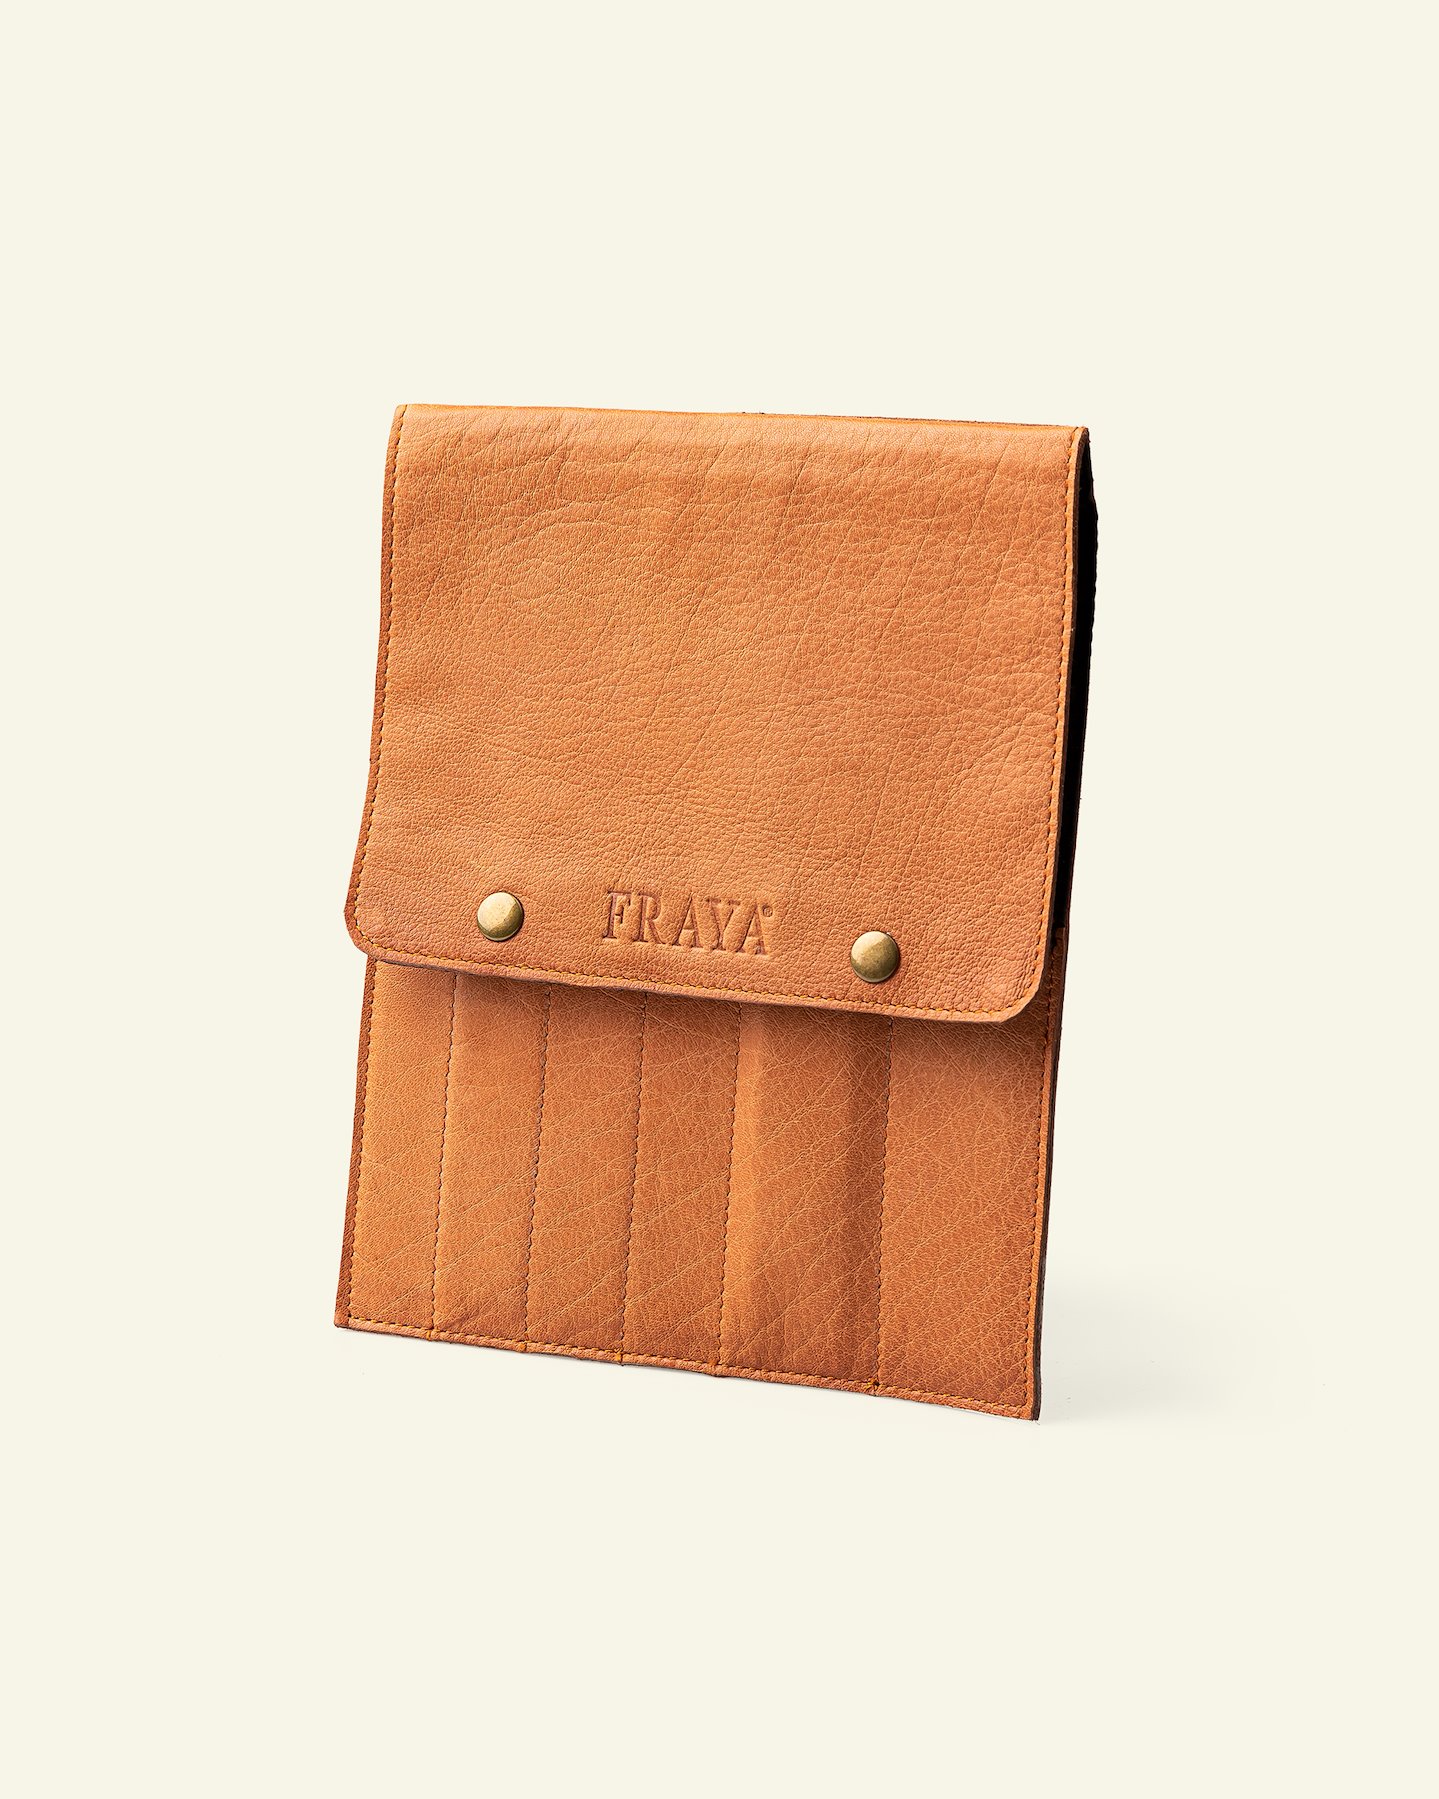 FRAYA leather sleeve, 24x18cm, brown 96802_pack